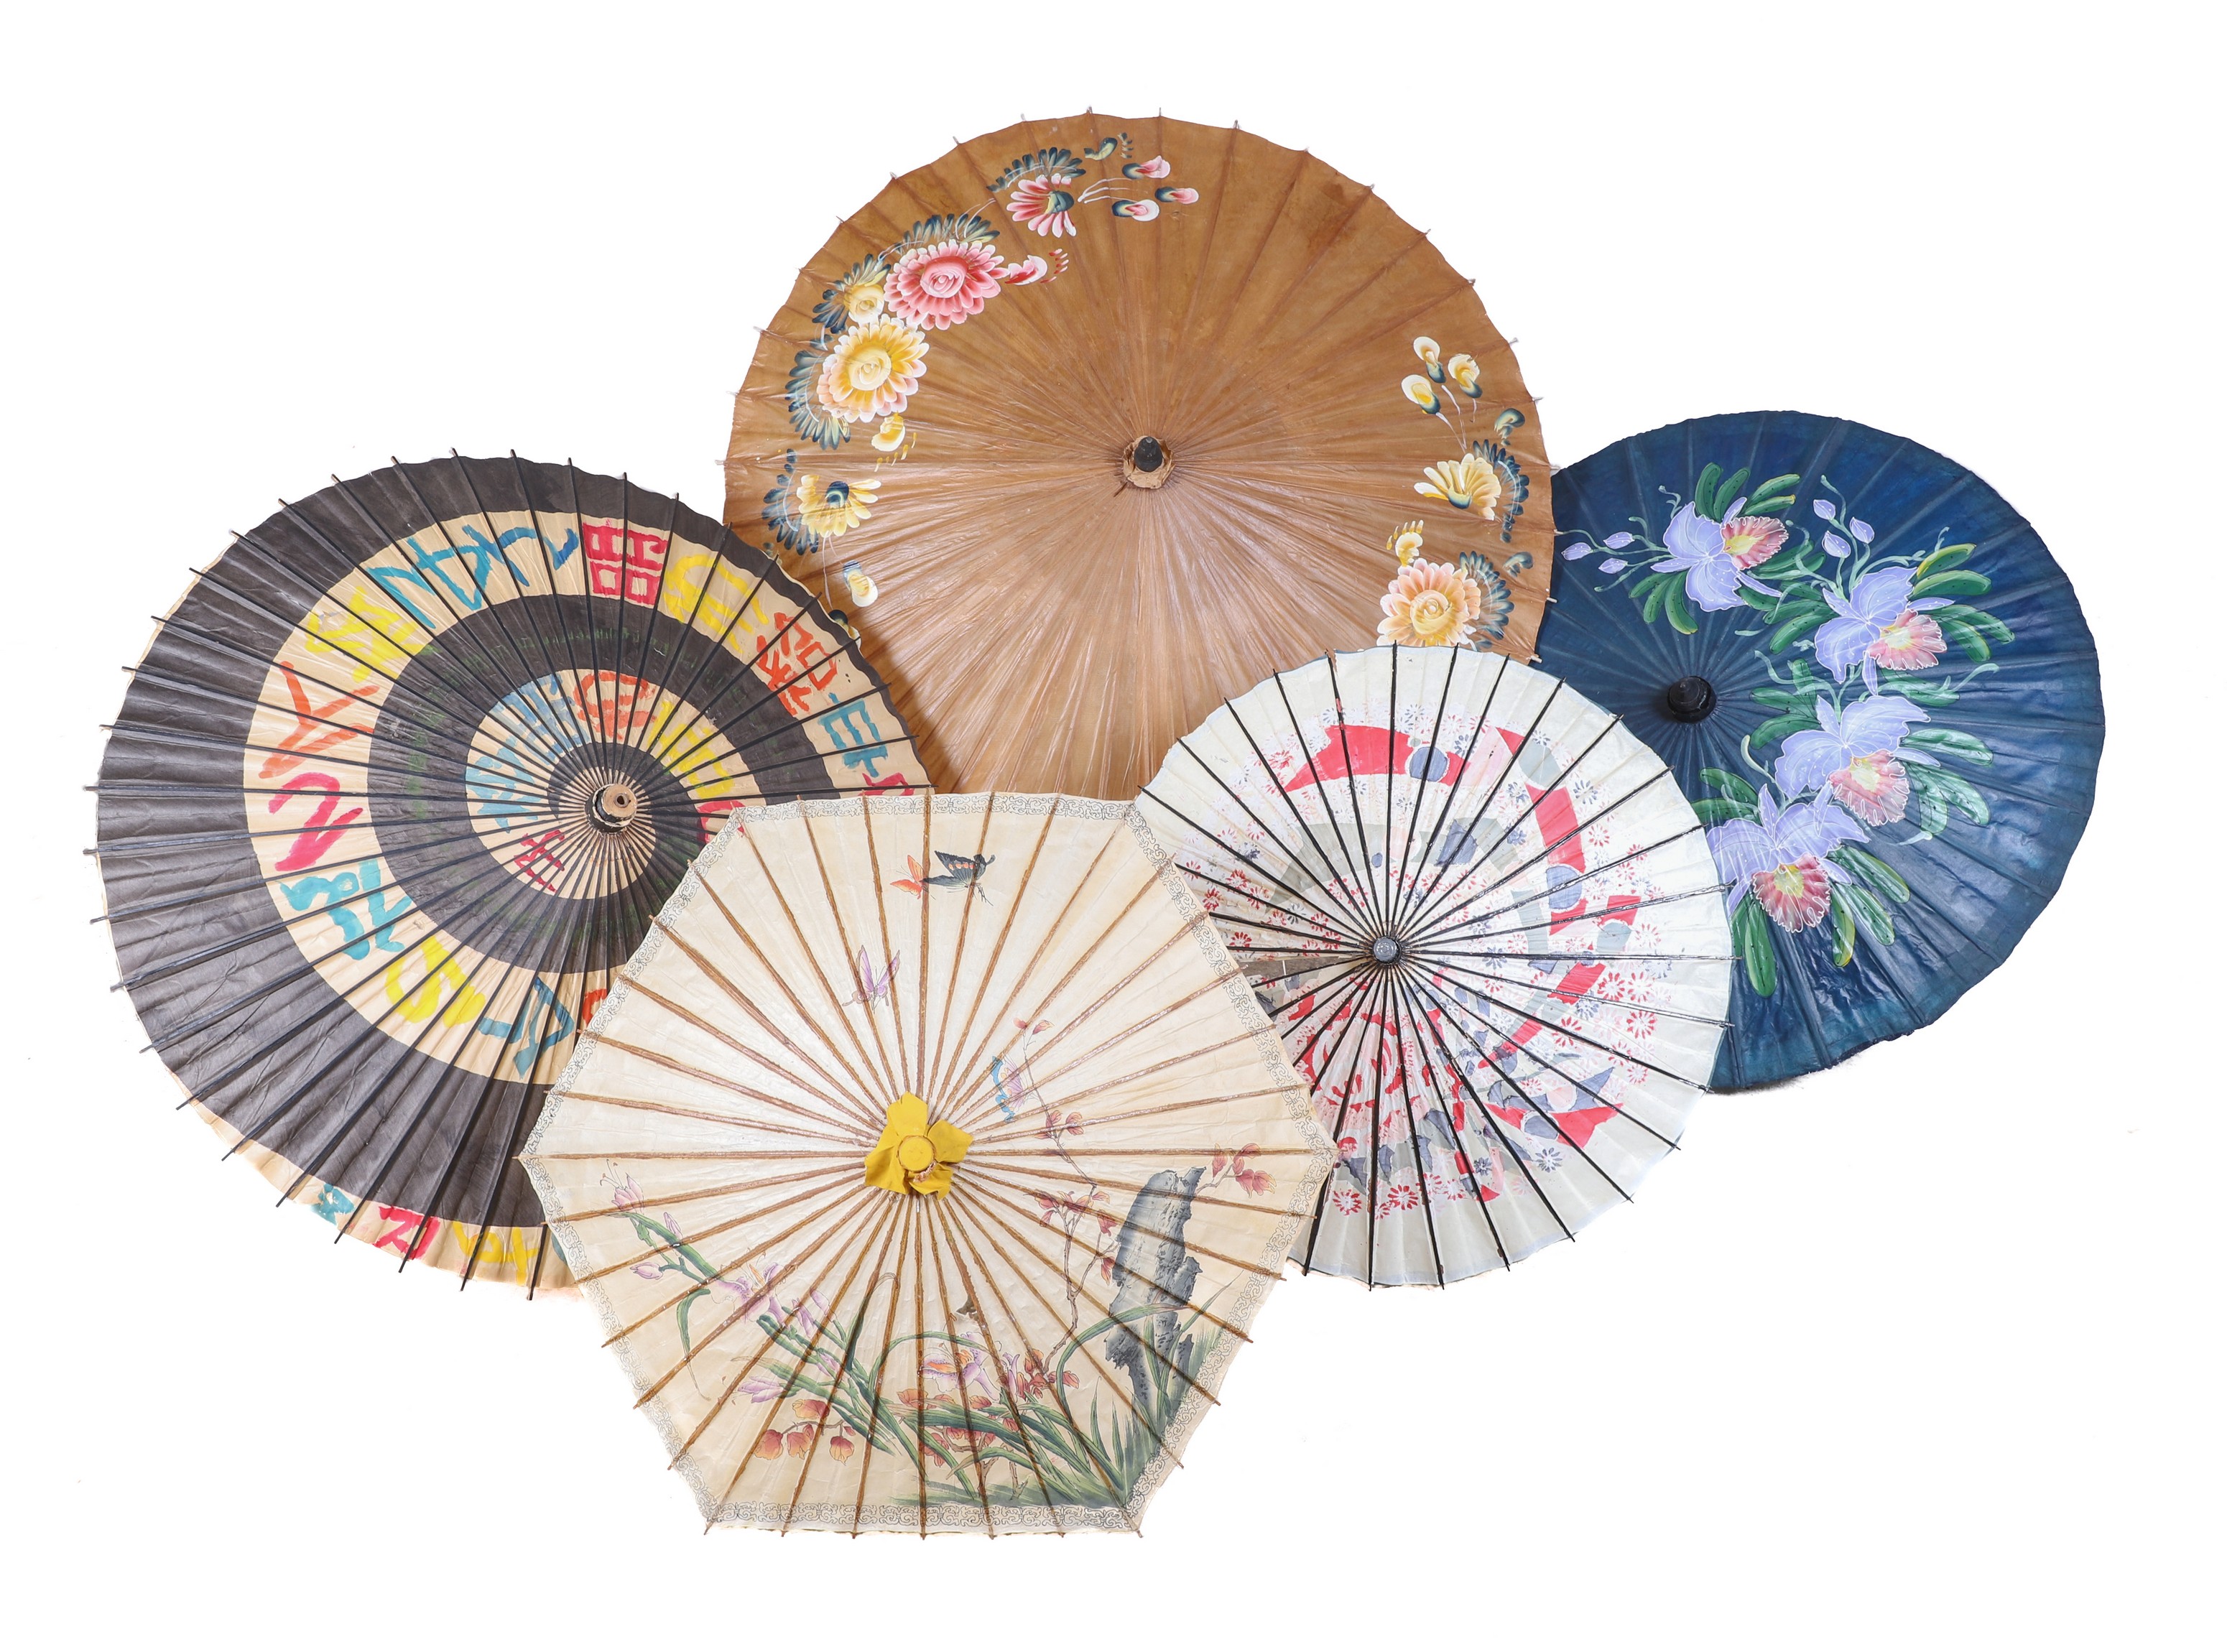  5 Asian painted parasols 27a68a